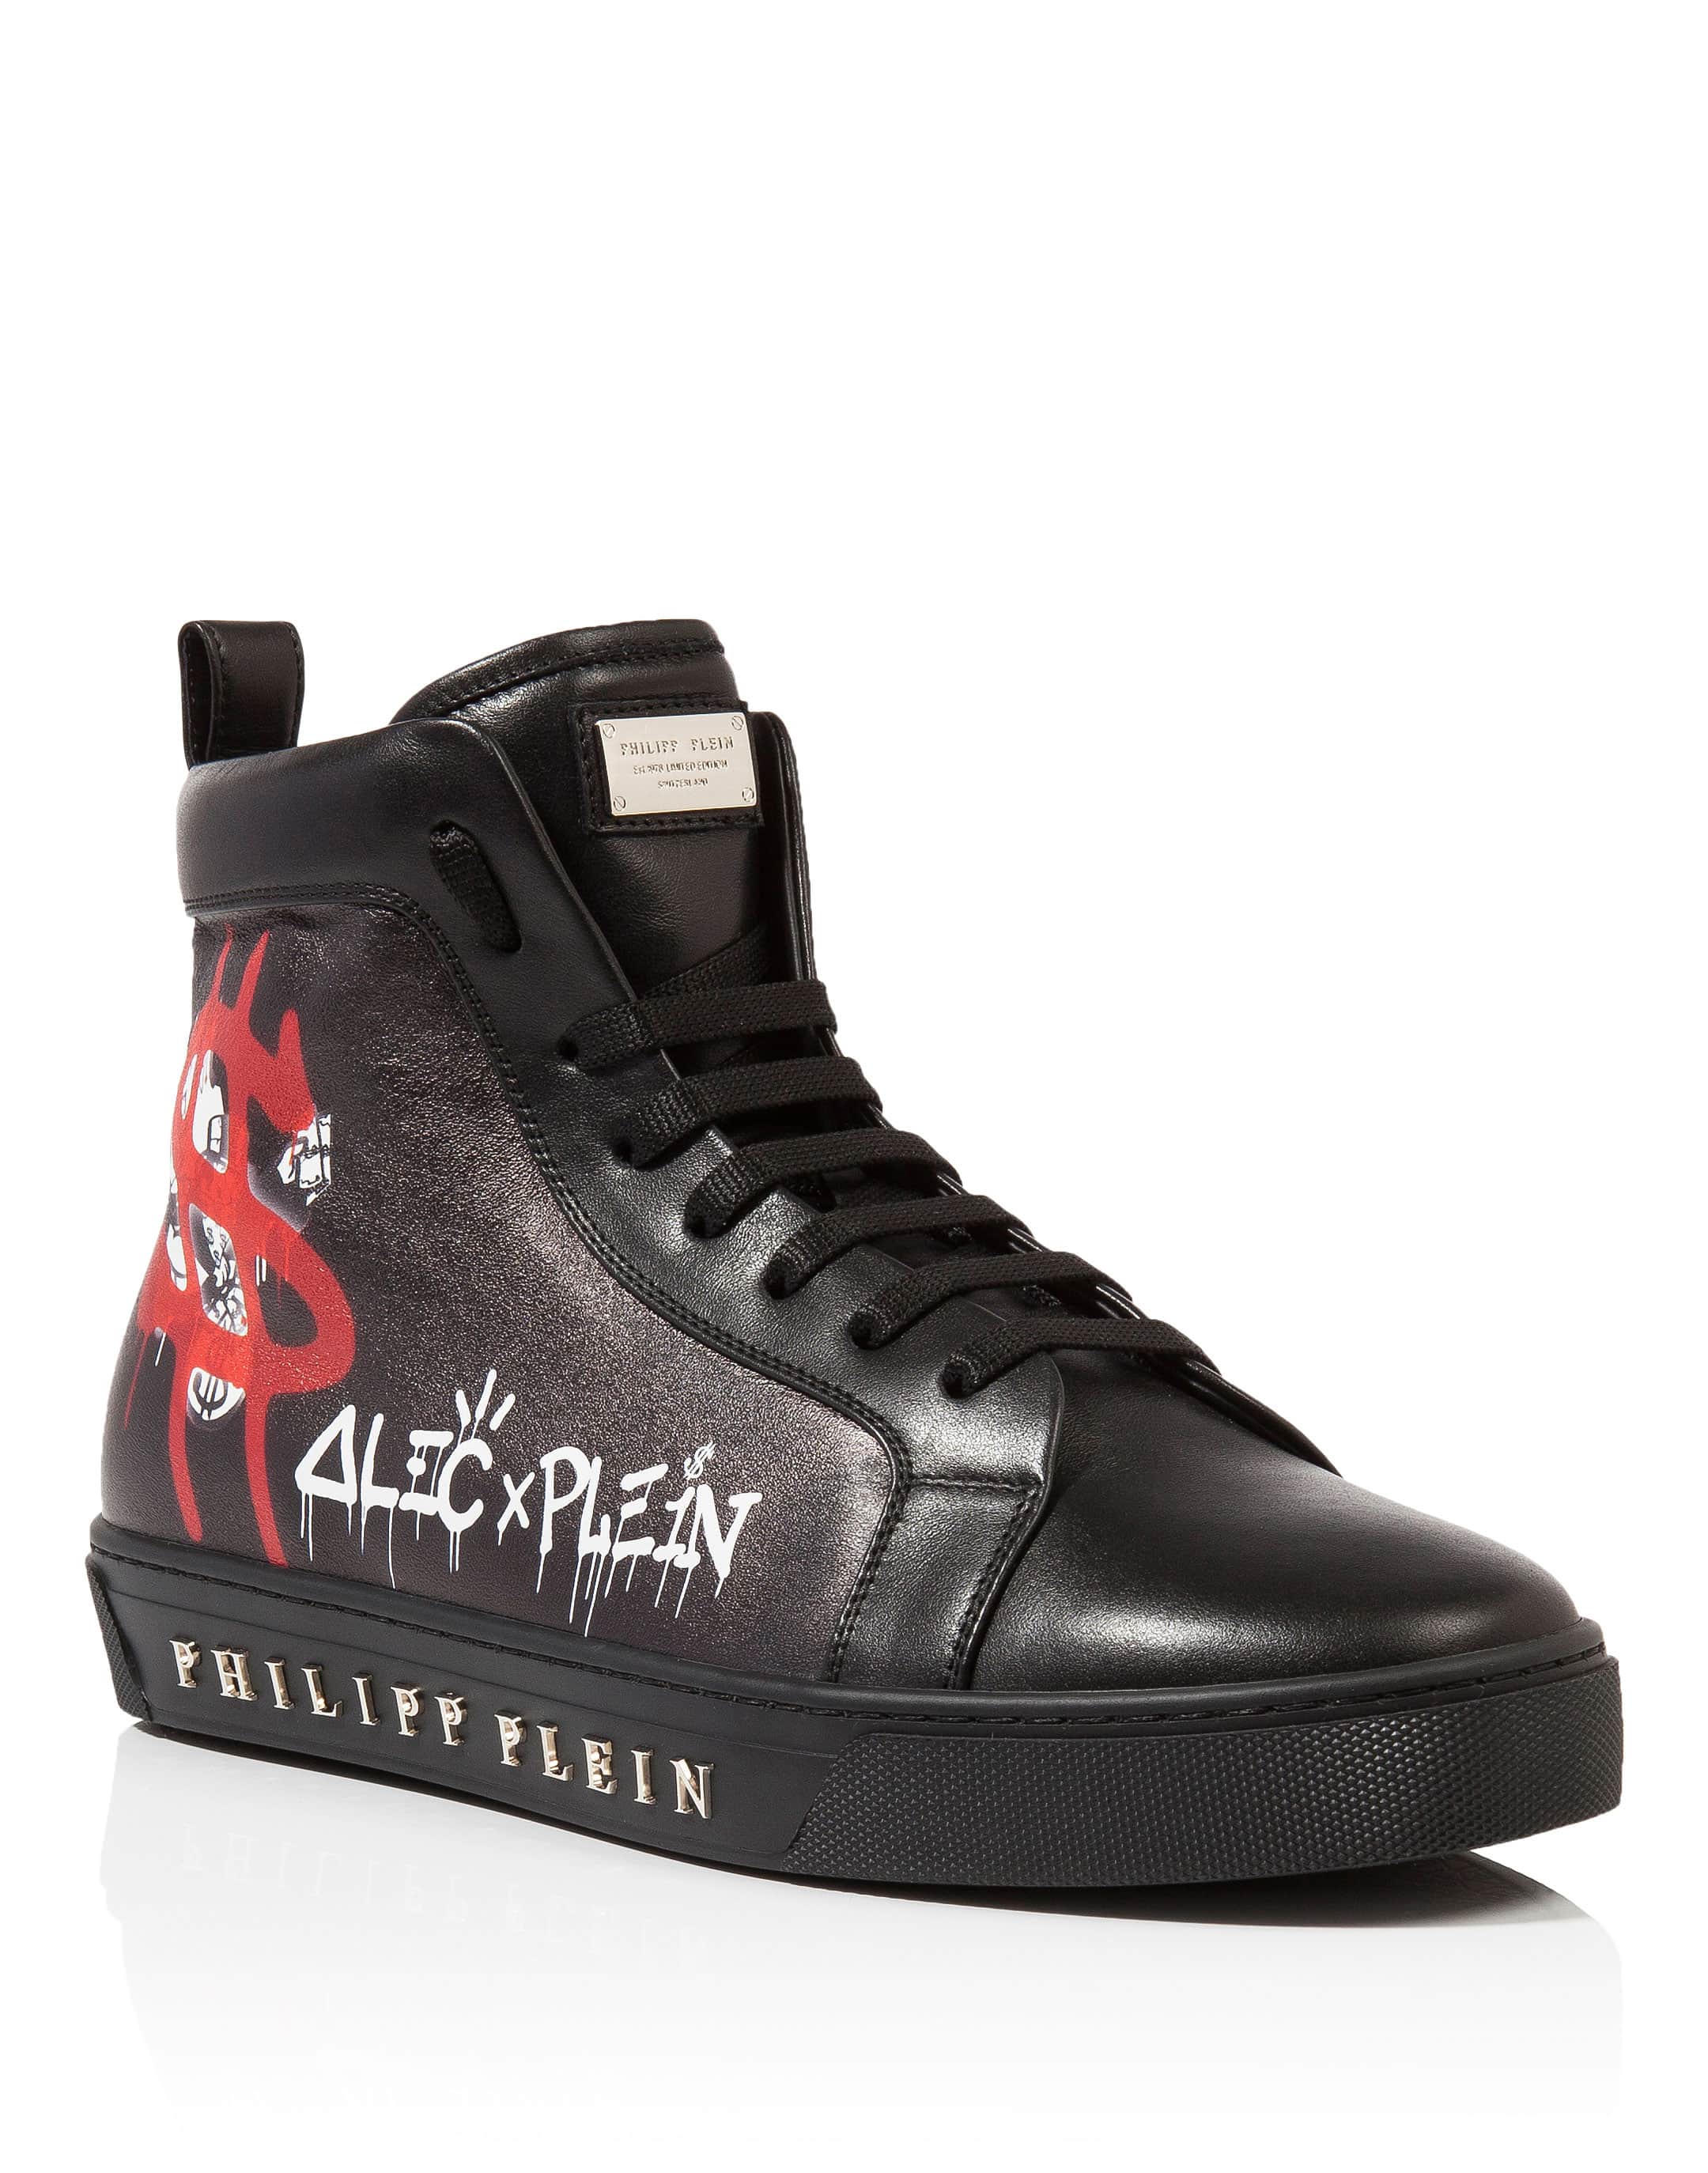 Hi-Top Sneakers "Alec one" | Philipp Plein Outlet